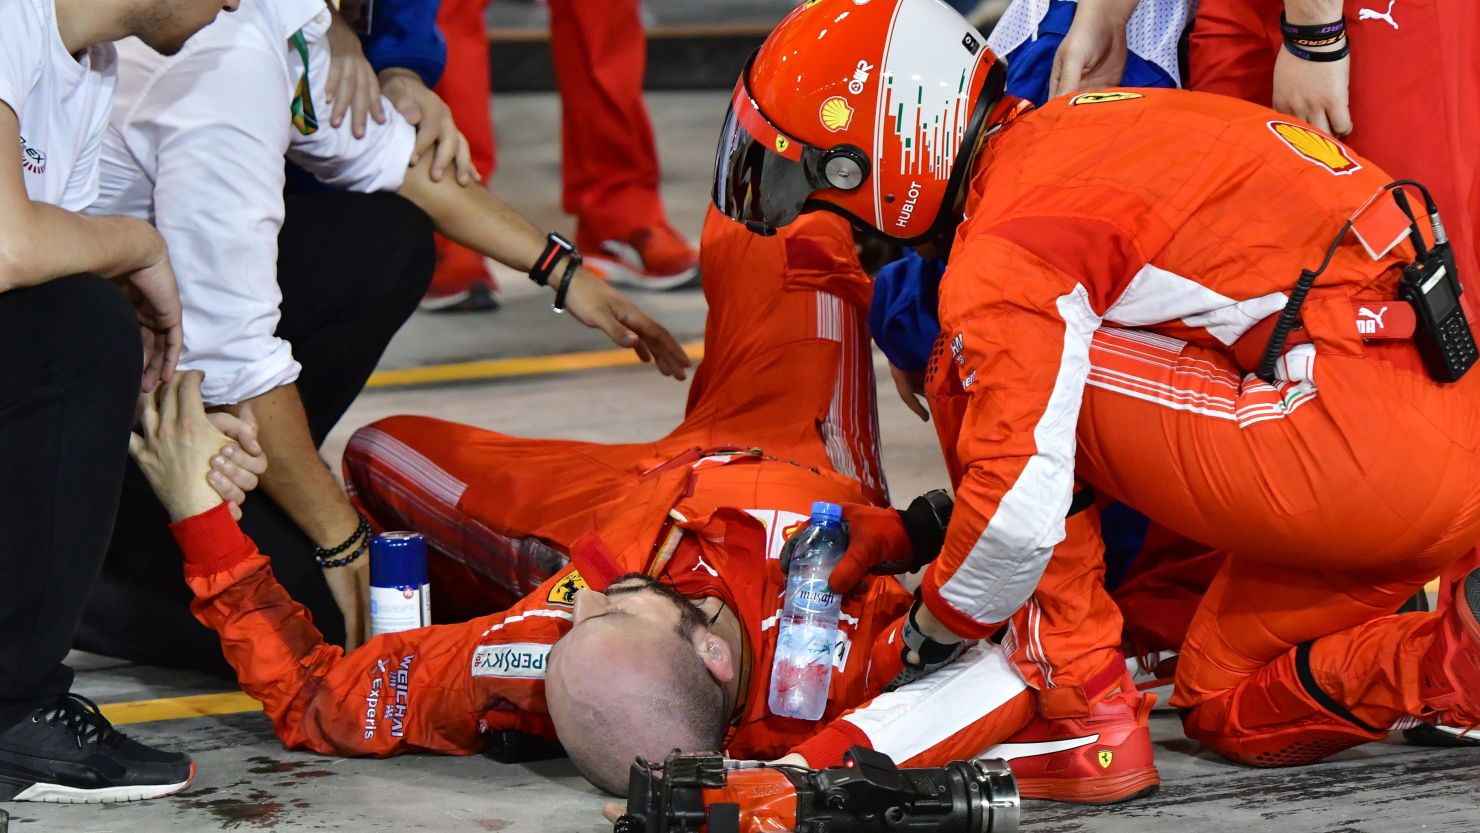 The Ferrari mechanic suffered a fractured shinbone and fibula.